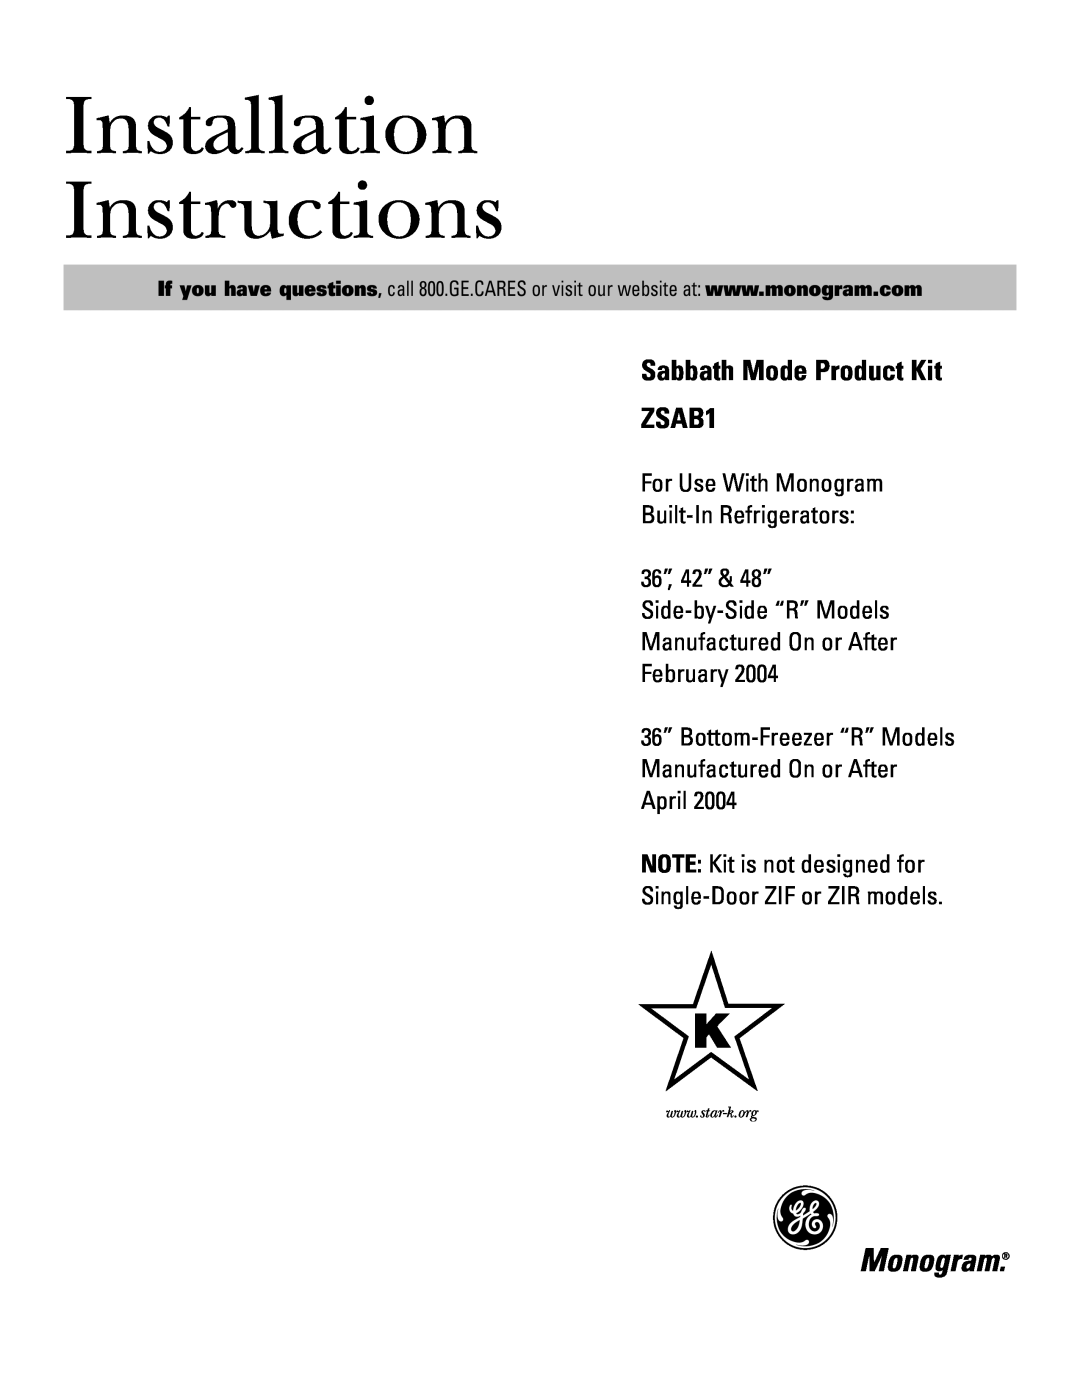 GE Monogram installation instructions Installation Instructions, Sabbath Mode Product Kit ZSAB1 